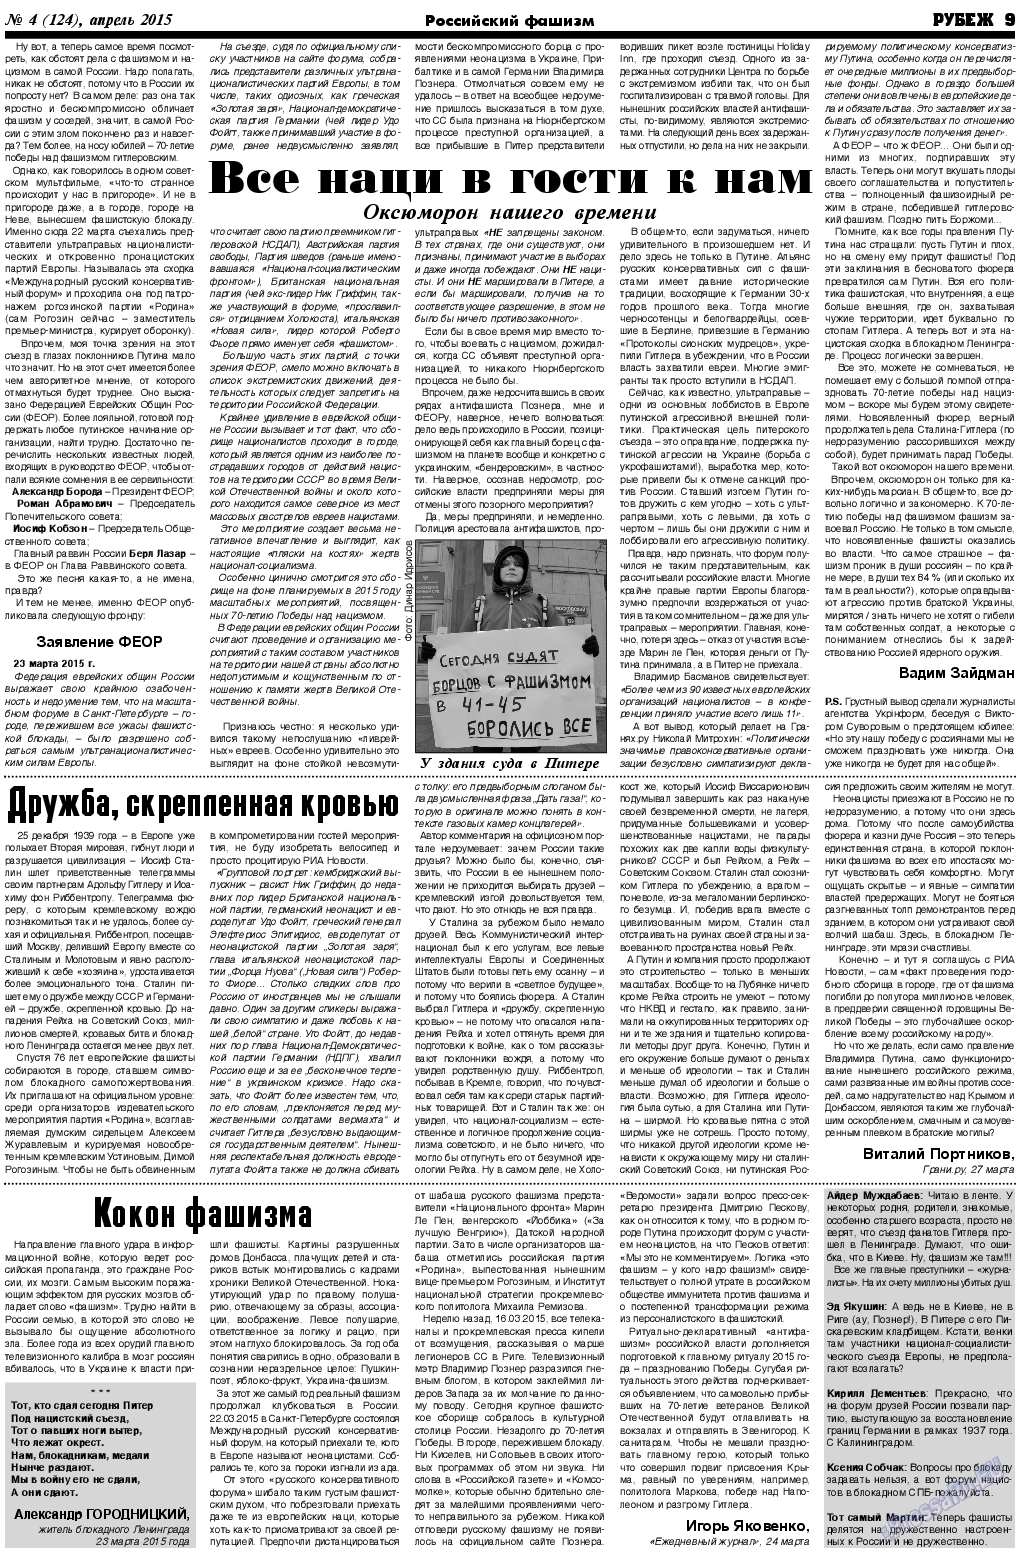 Рубеж, газета. 2015 №4 стр.9